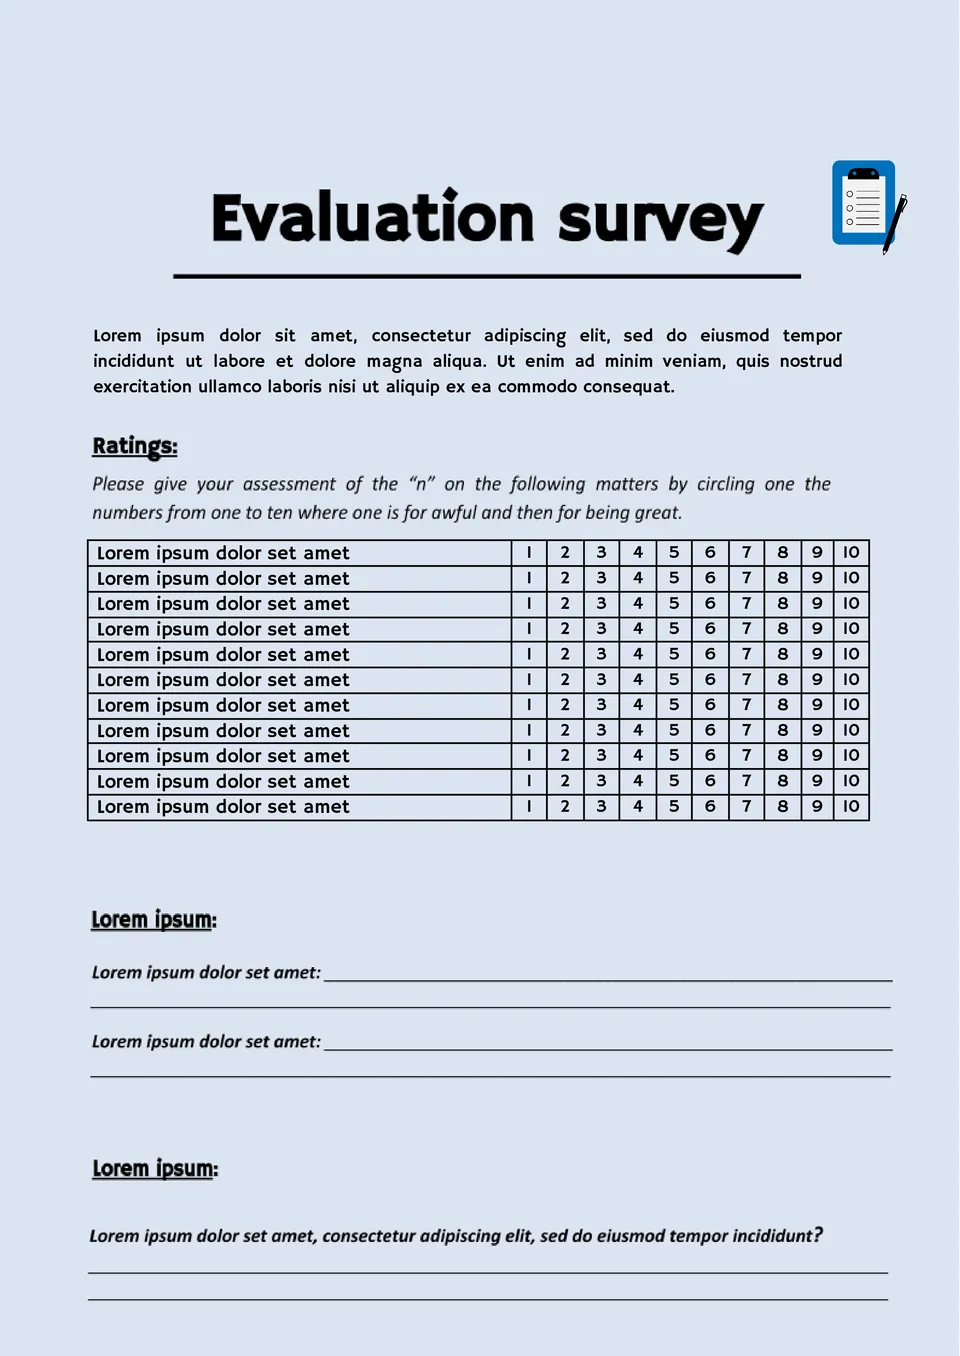 Evaluation survey